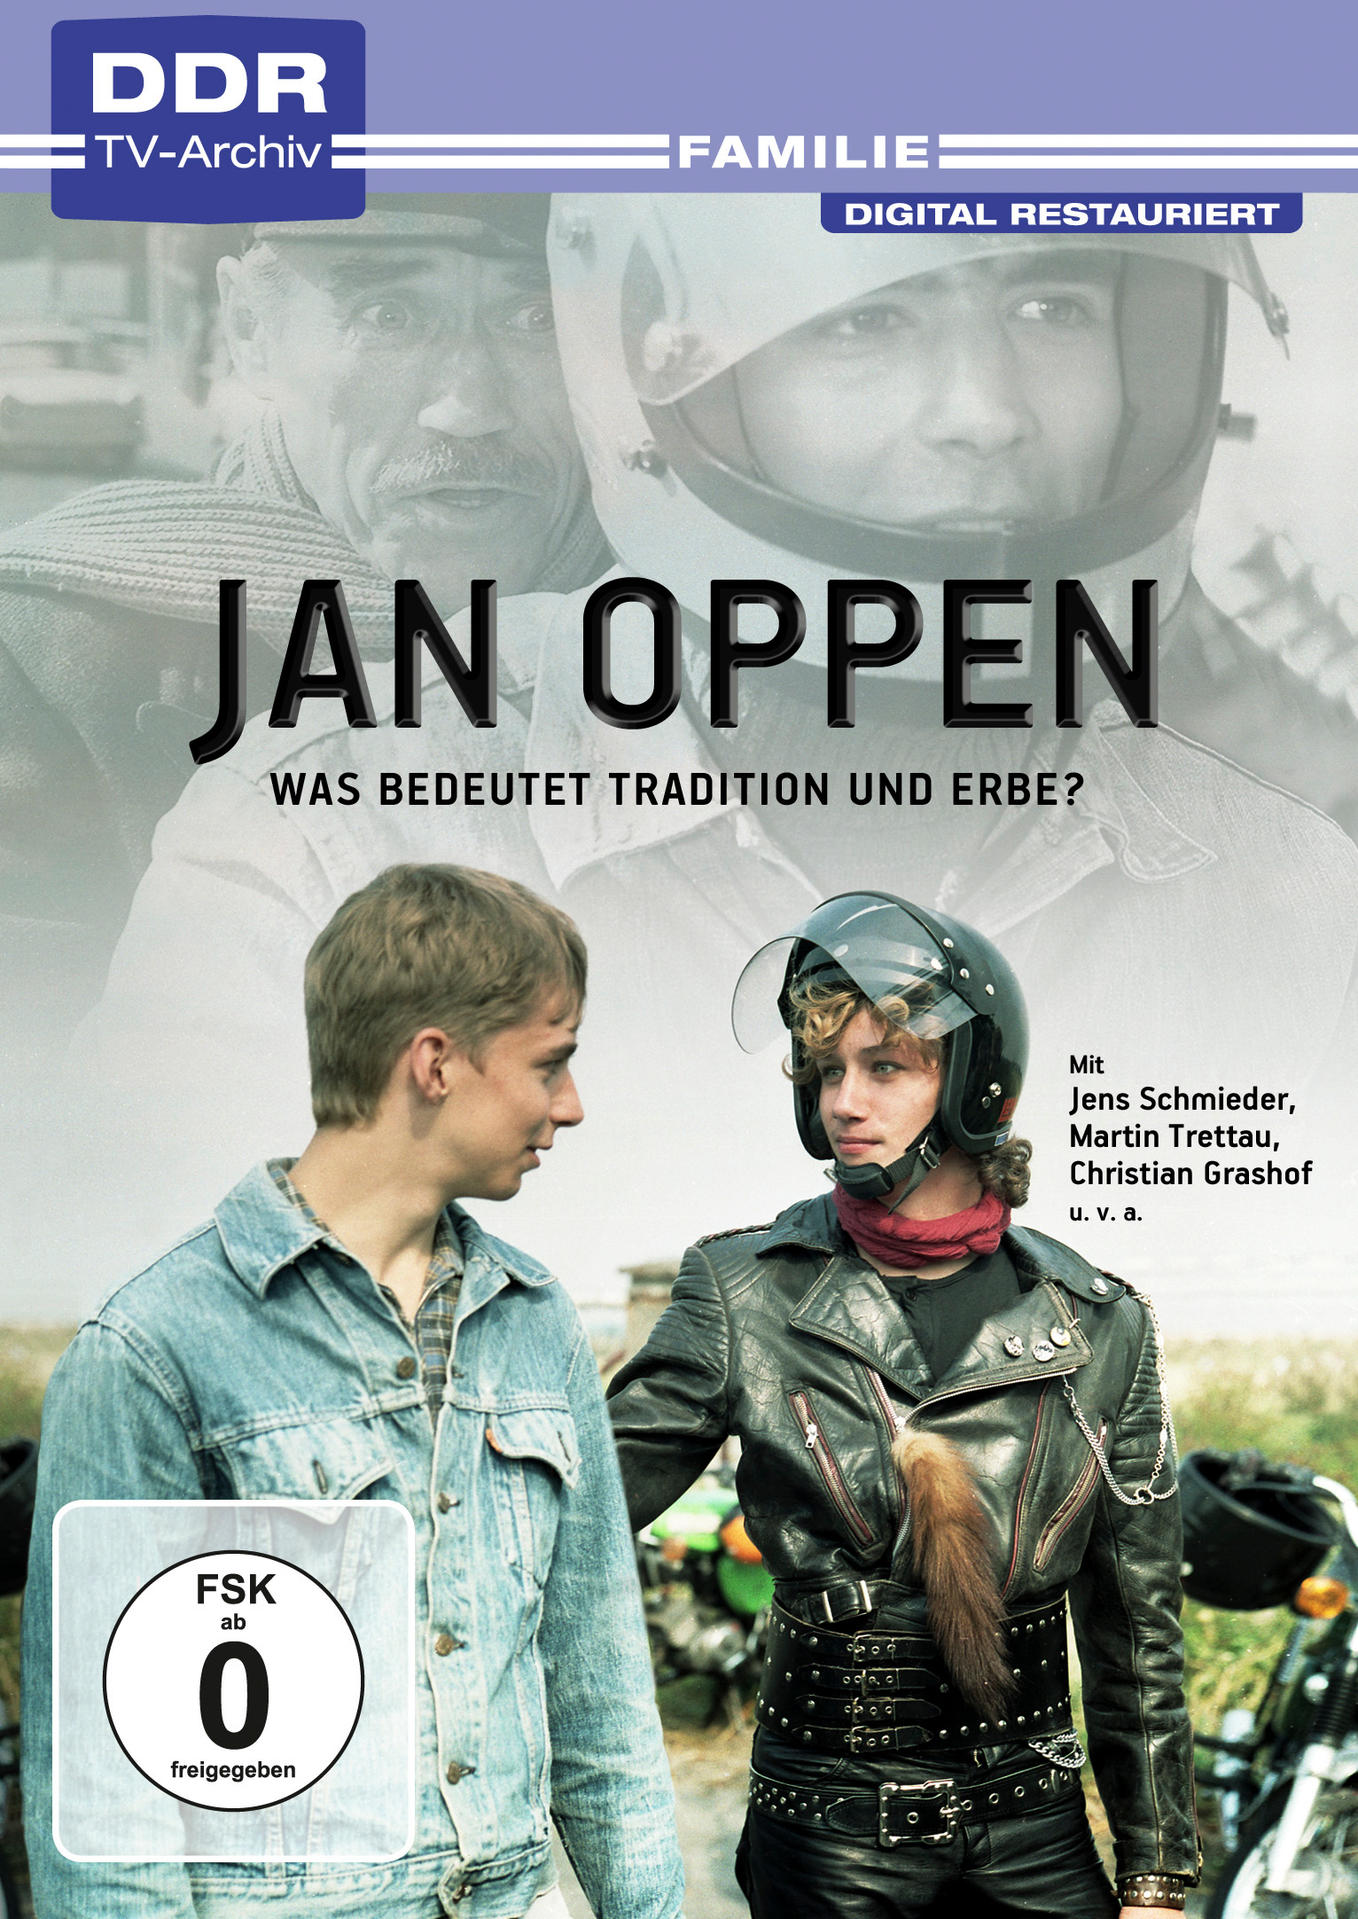 TV-Archiv) (DDR Jan Oppen DVD